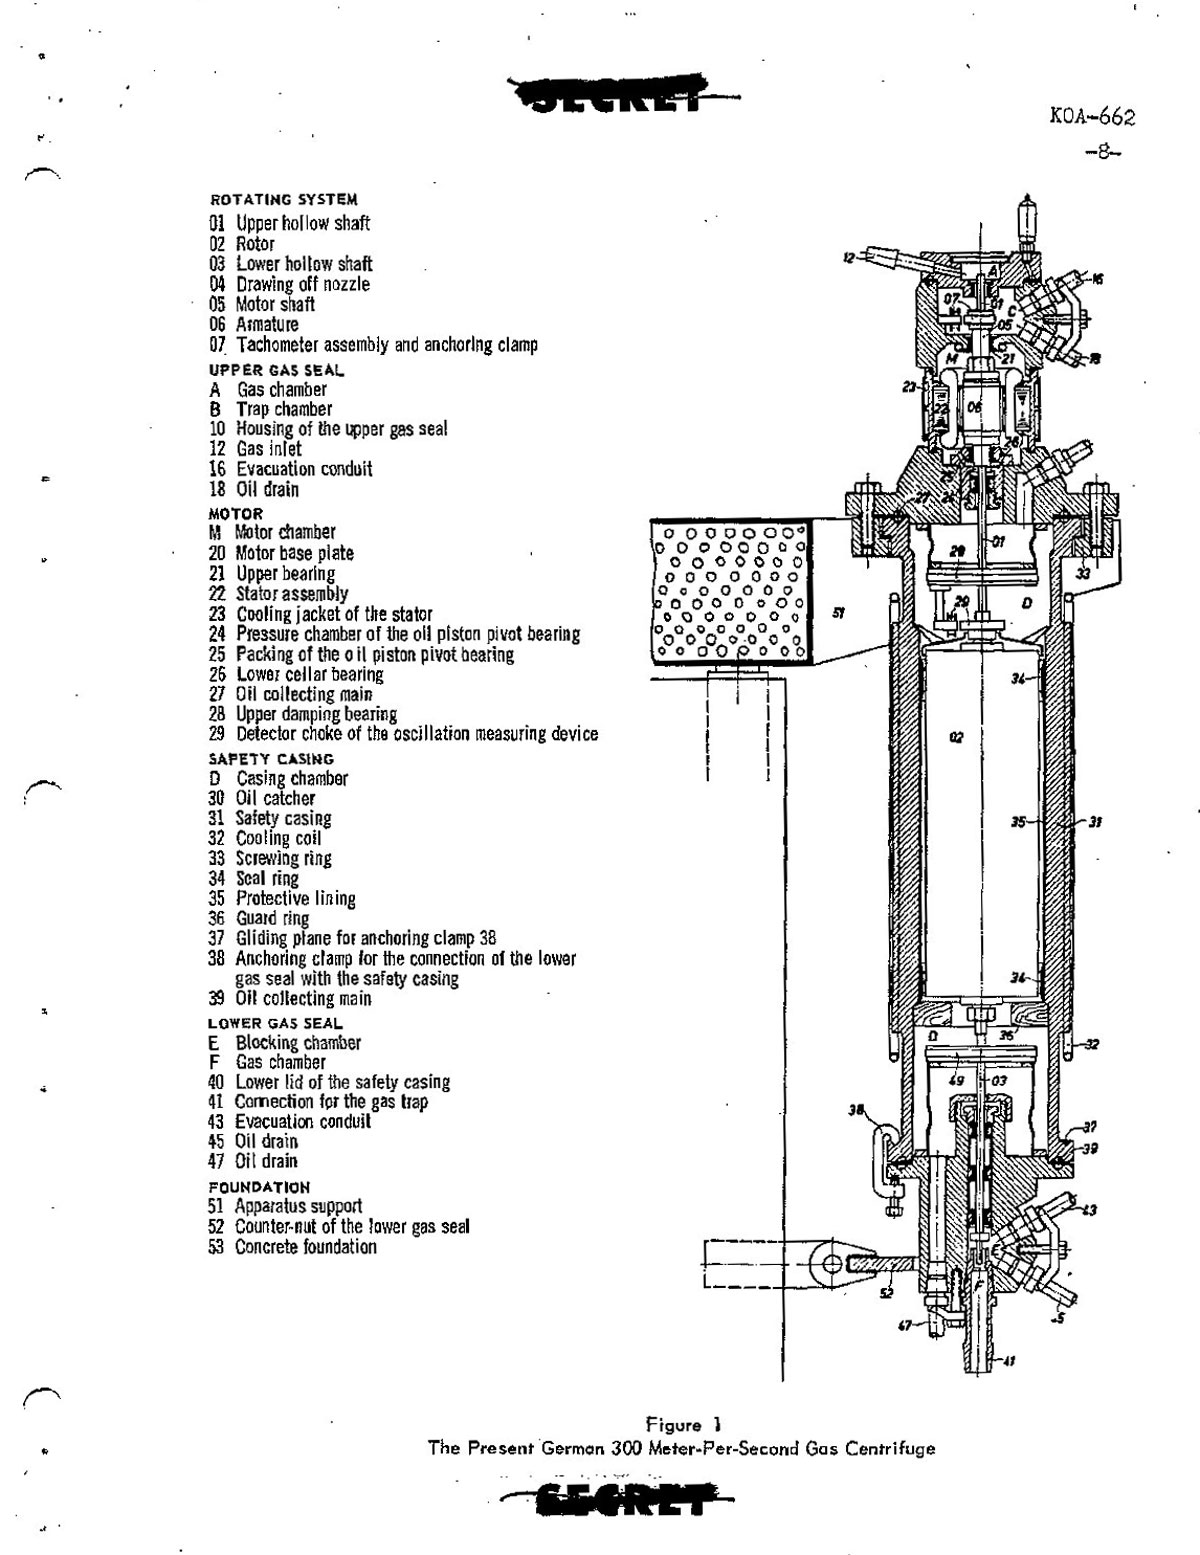 3-west-german-gas-centrifuge-1200